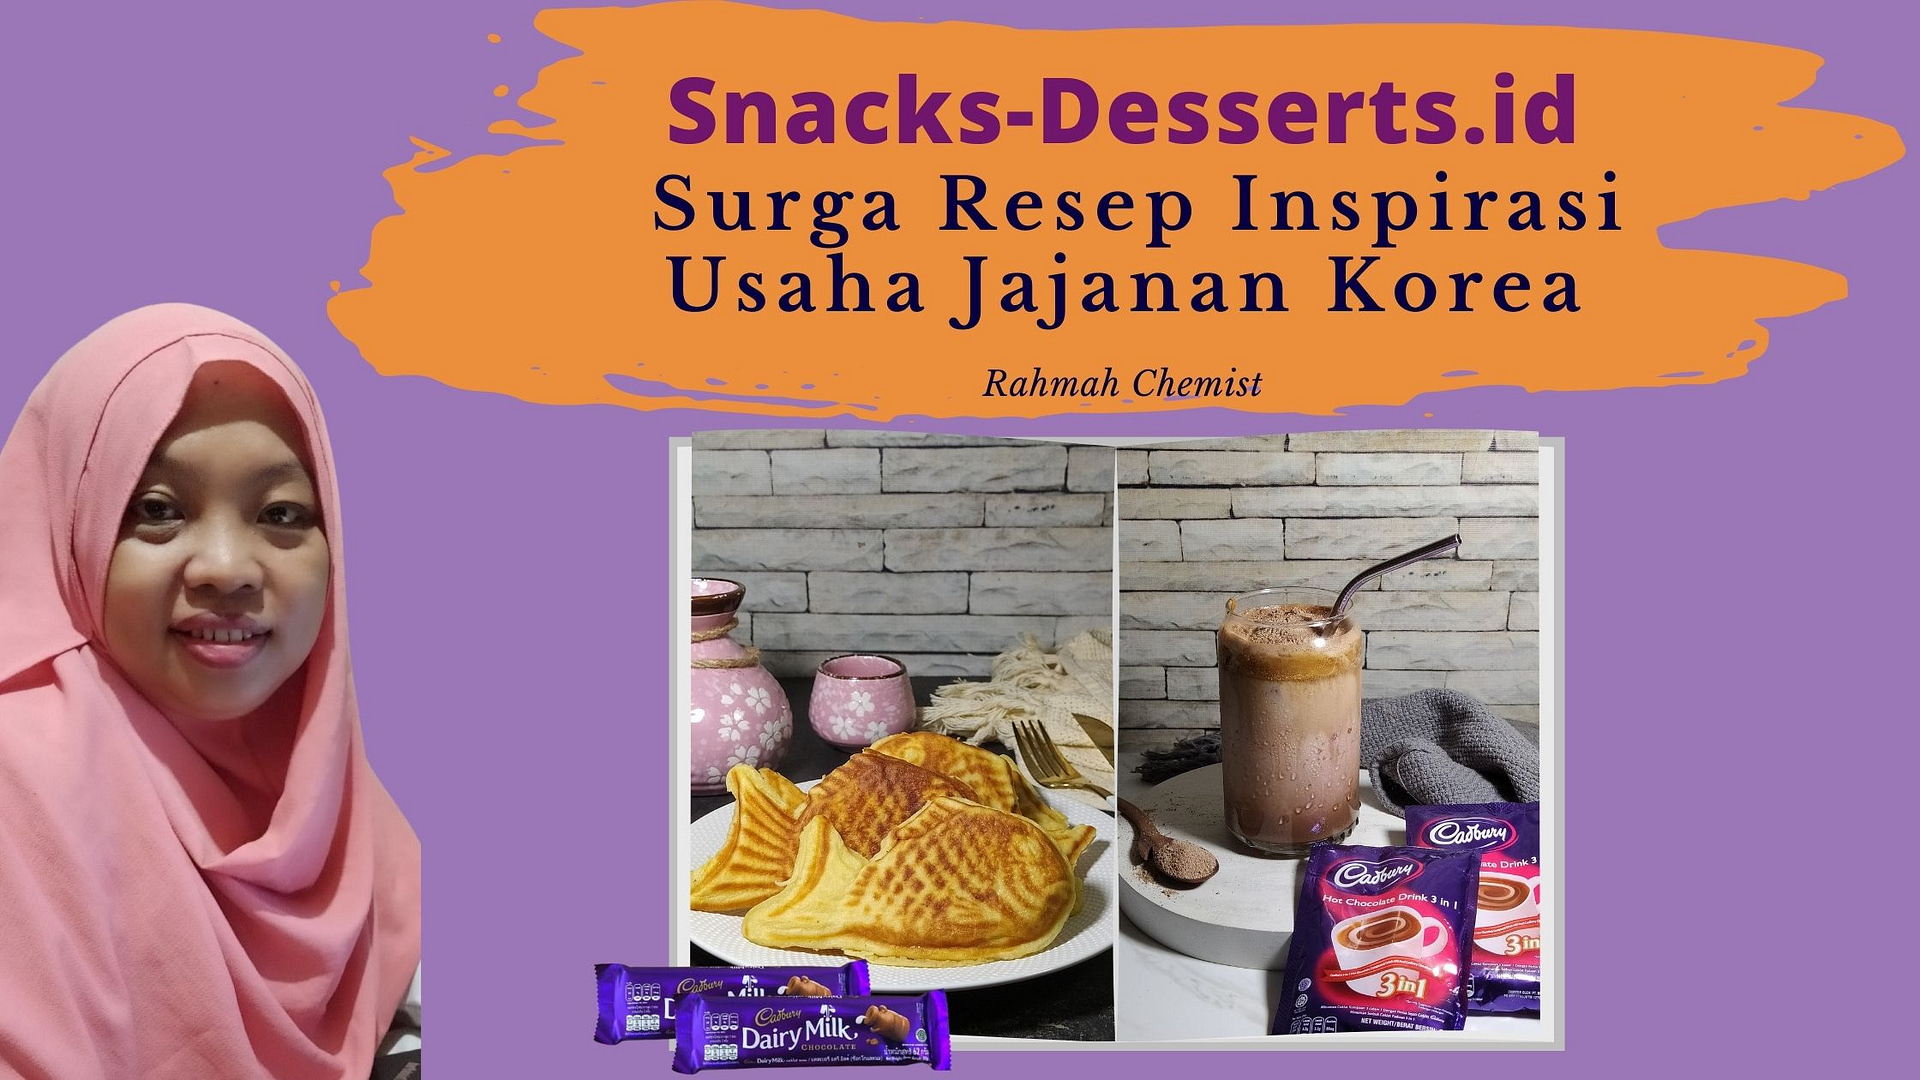 surga resep inspirasi usaha jajanan korea snacks-desserts.id